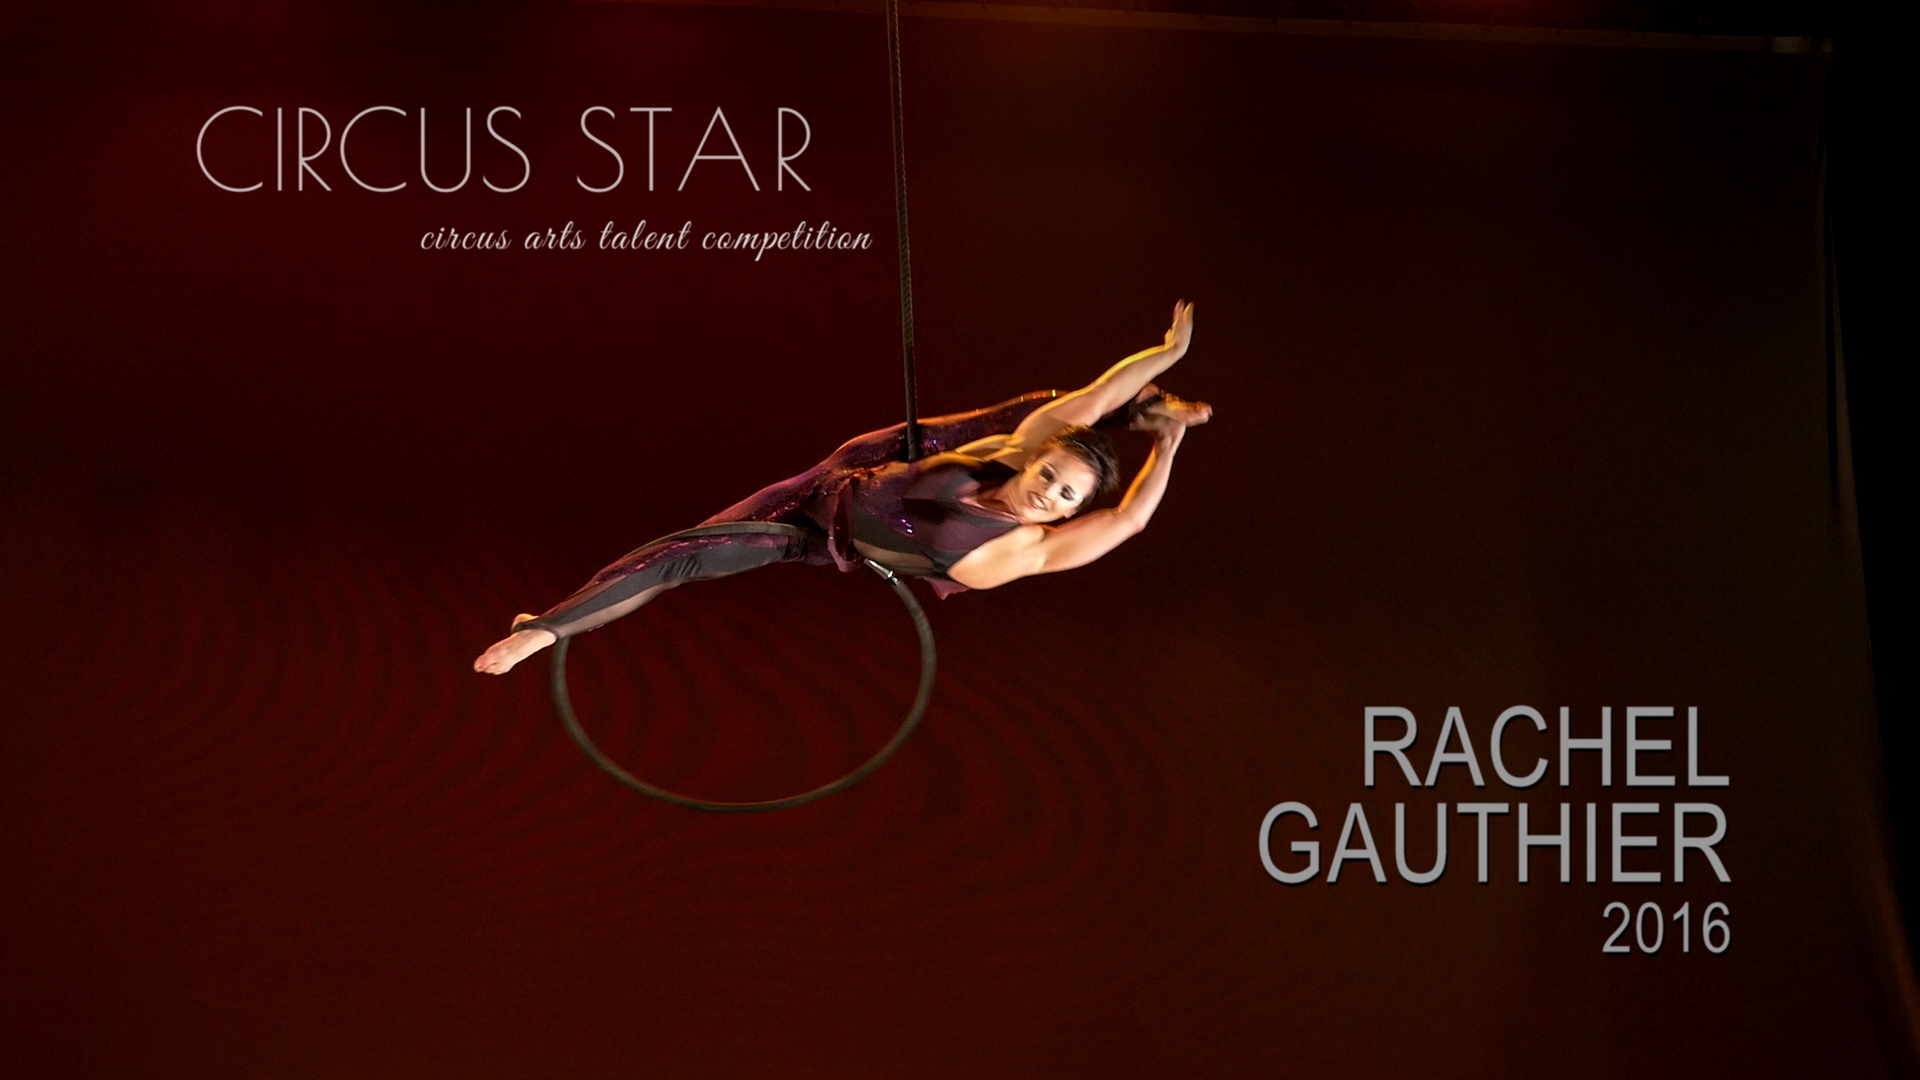 Rachel Gauthier, Circus Star USA 2016 performer